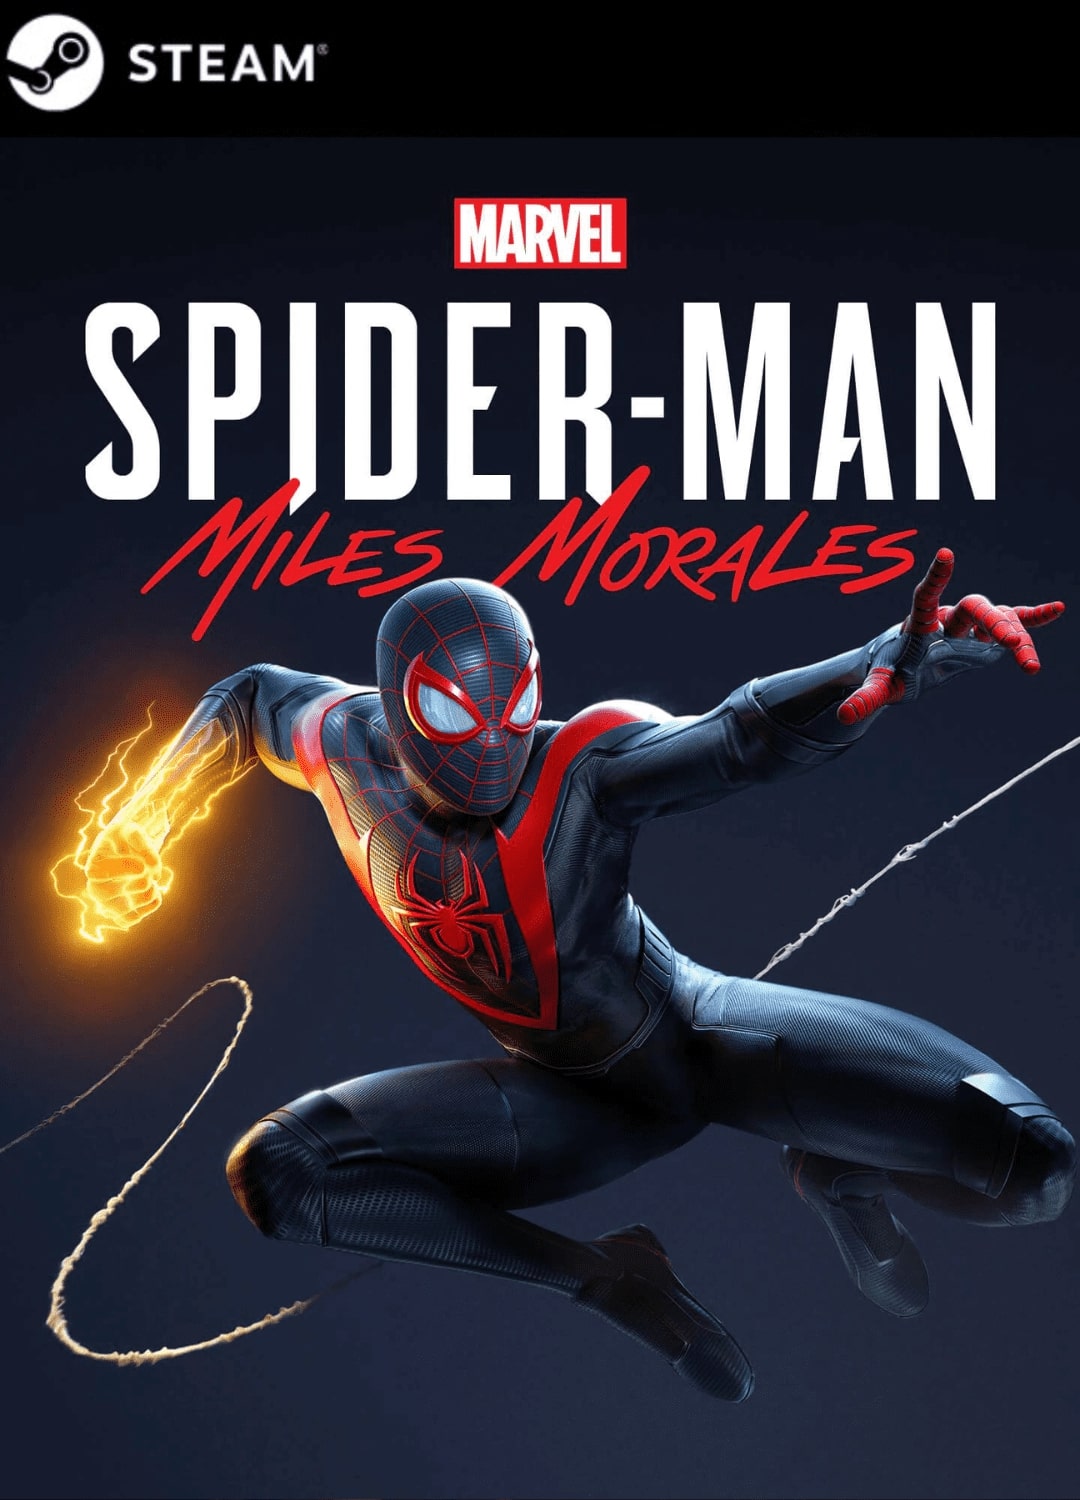 Marvel’s Spider-Man: Miles Morales for PC Steam Key